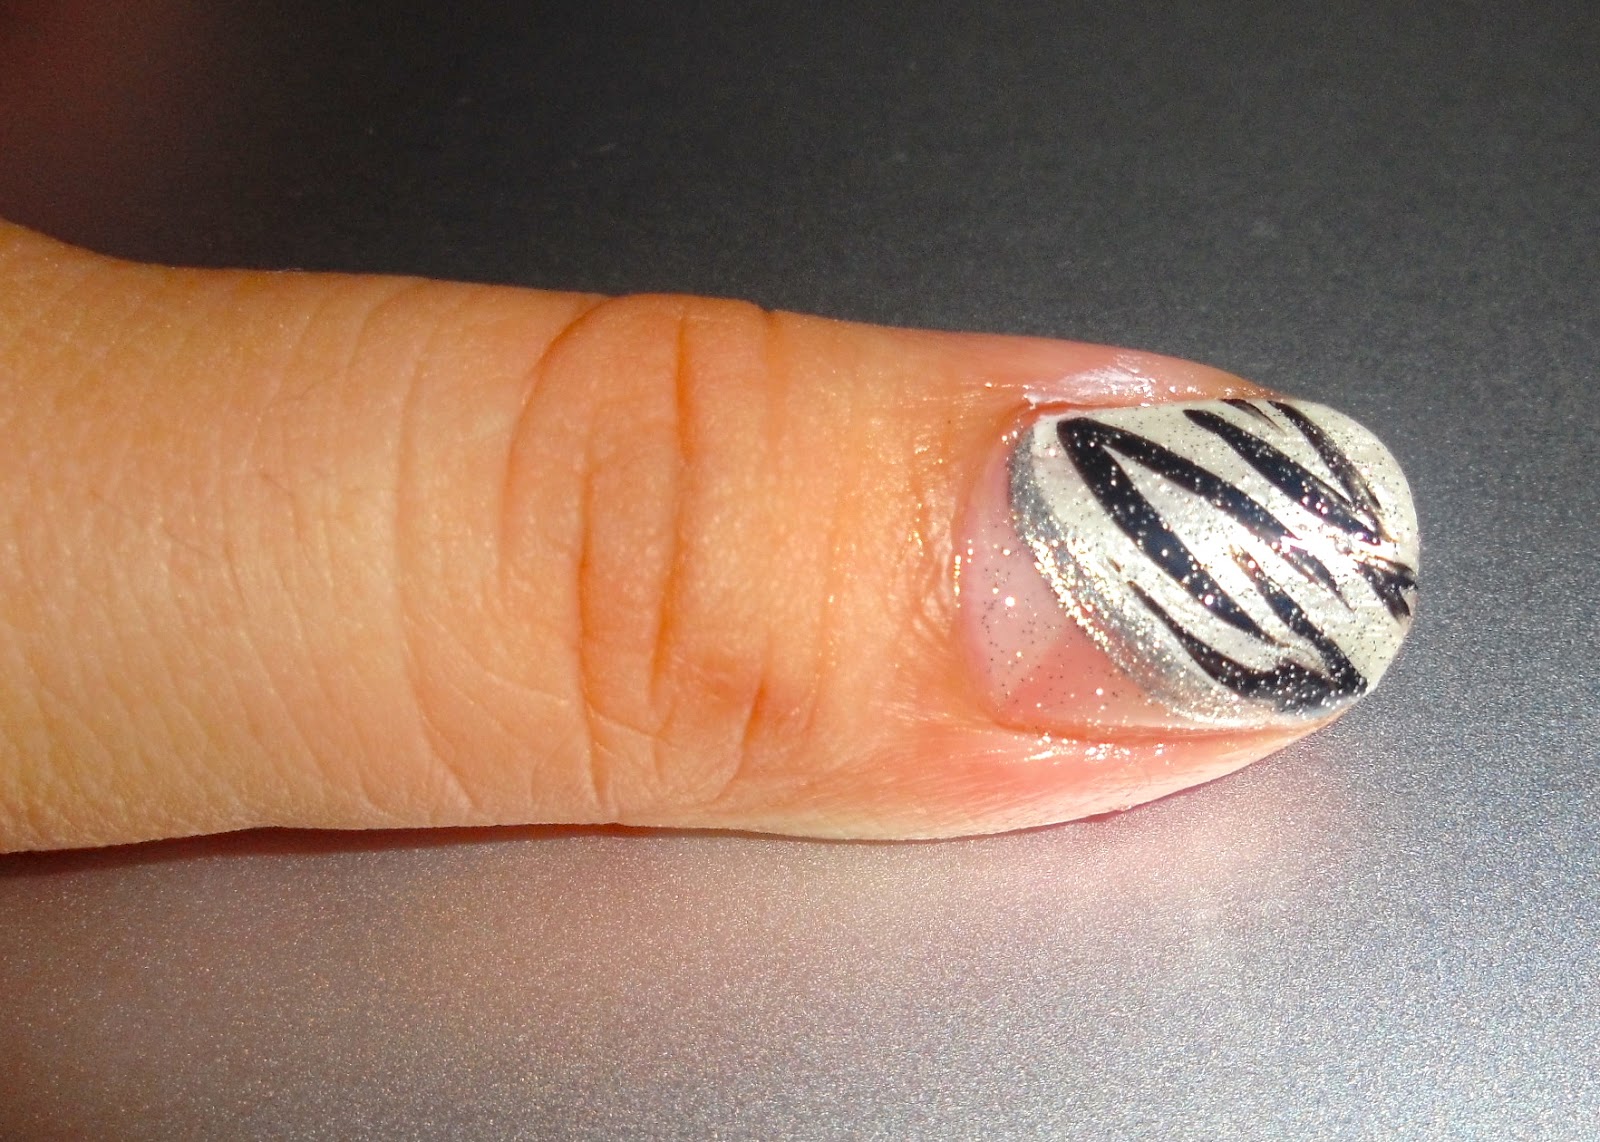 5. Zebra Print Nail Art Step by Step - wide 5